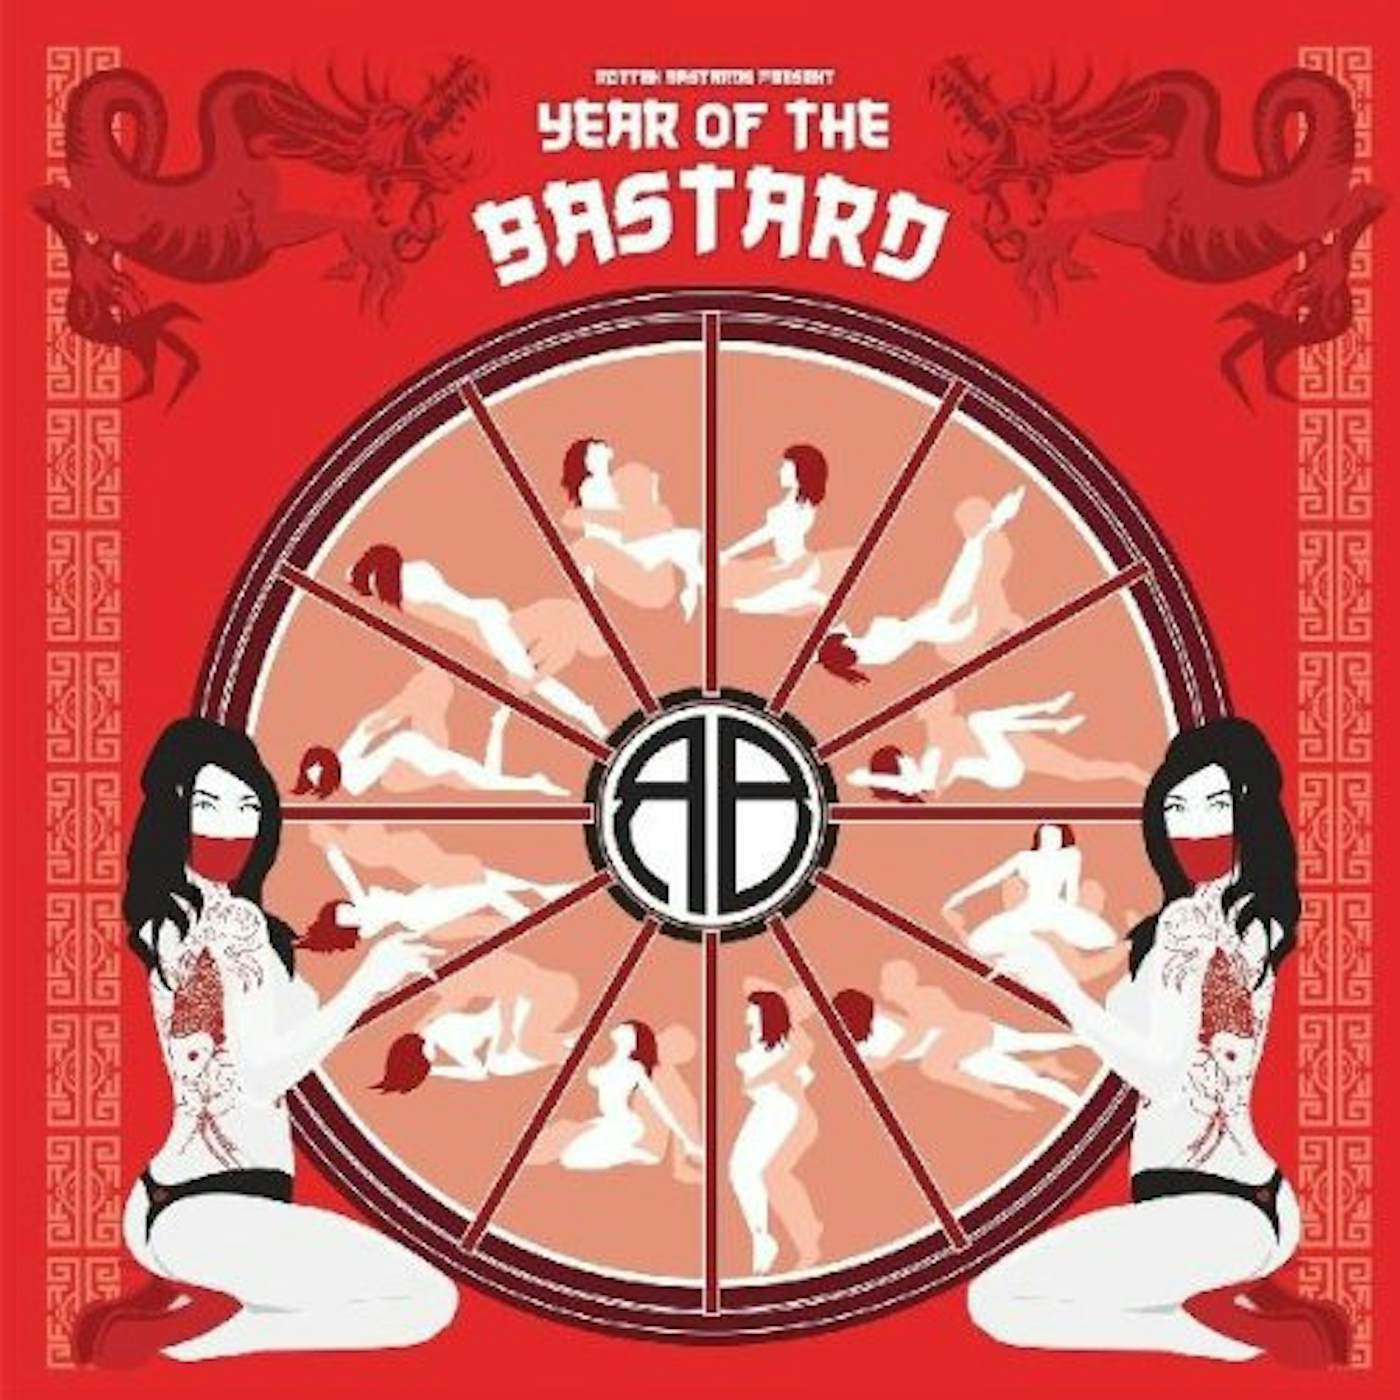 Rotten Bastards YEAR OF THE BASTARD Vinyl Record